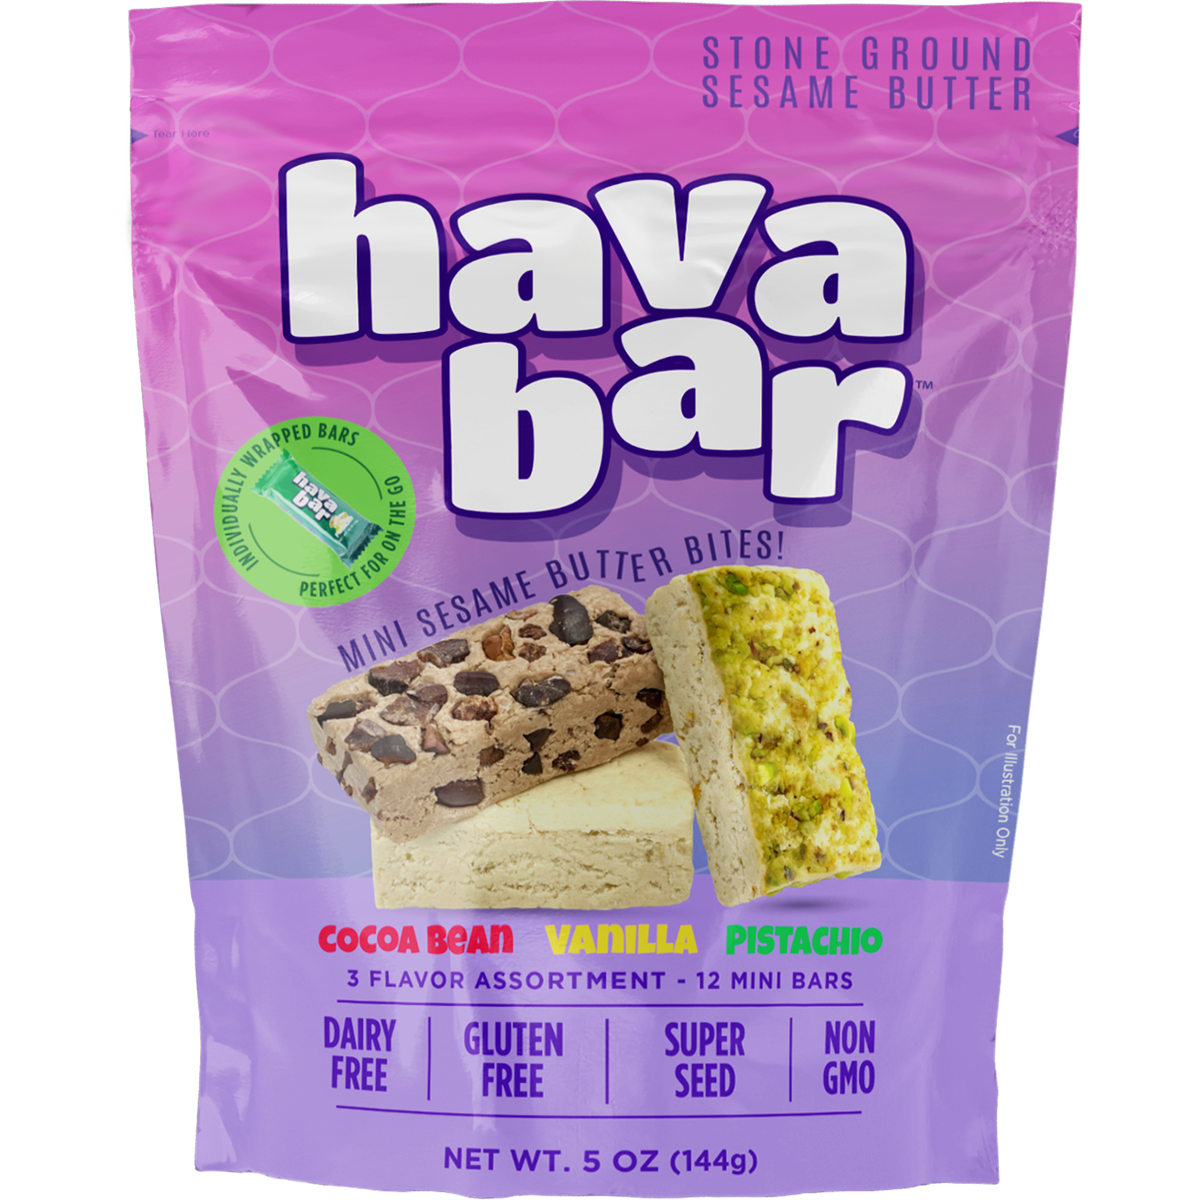 Mini Sesame Butter Bites | Halva | Bag | 5.1 oz | Hava Bar